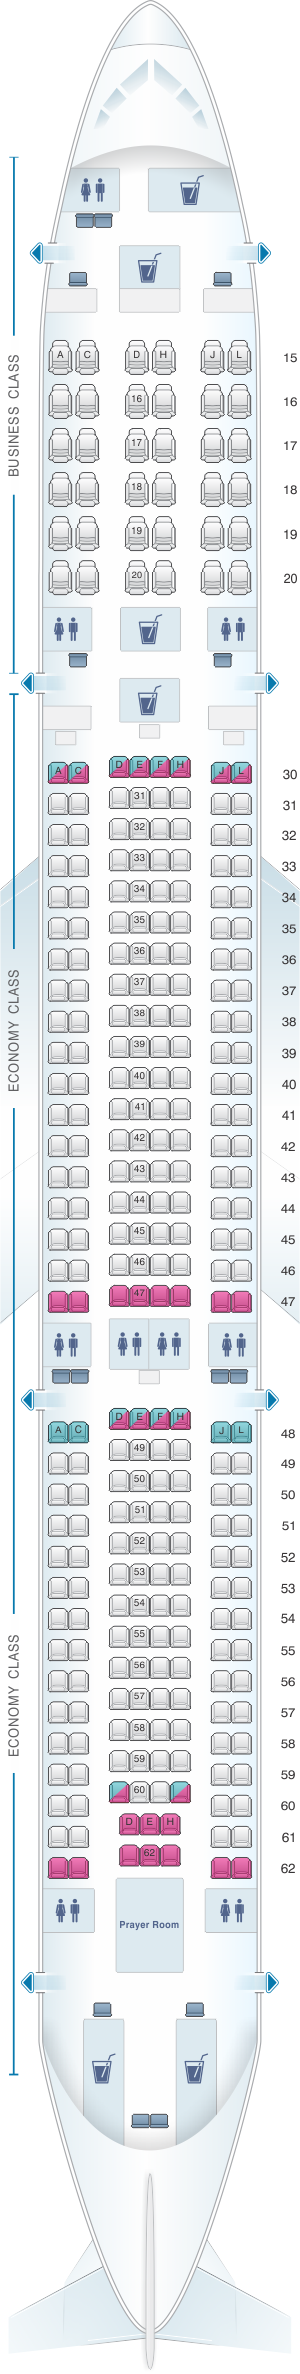 Seat Map Saudi Arabian Airlines Airbus A330 300 333 Seatmaestro